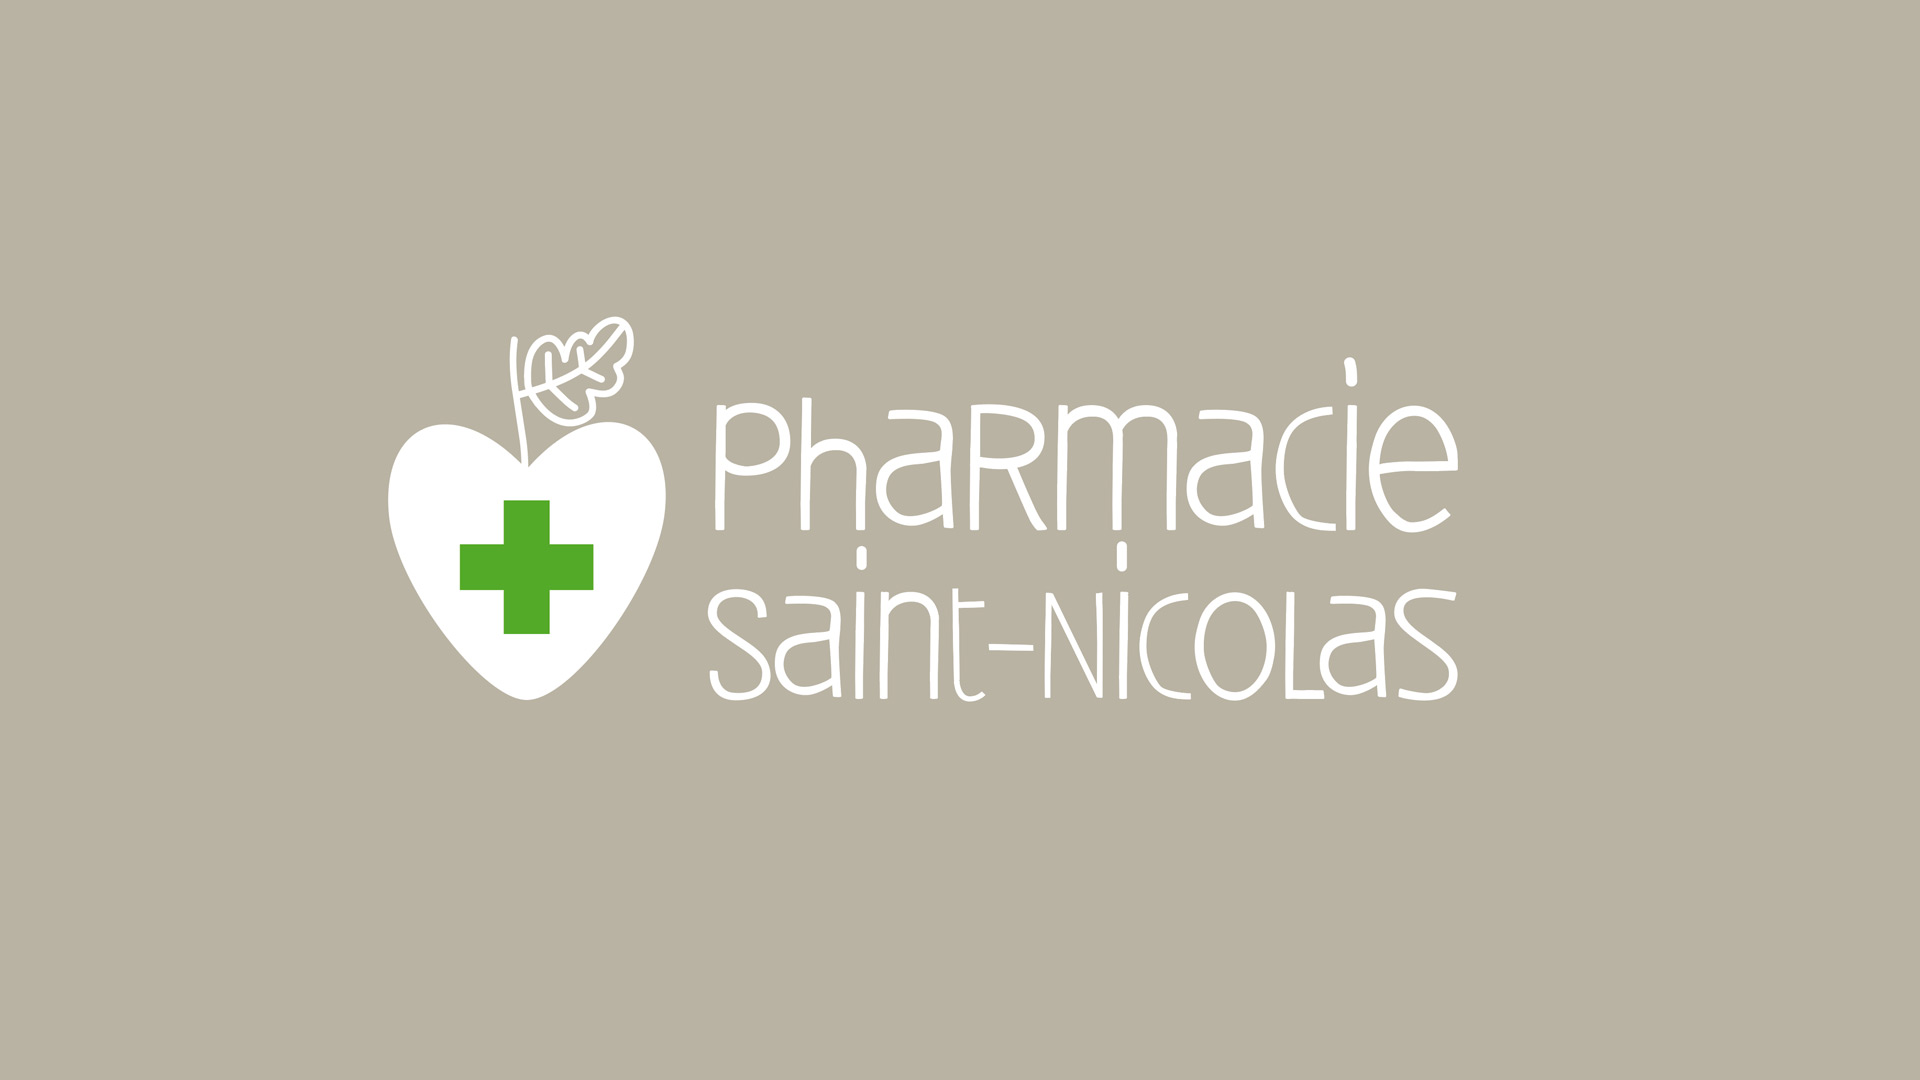 pharmacie saint nicolas identite visuelle signaletique logotype